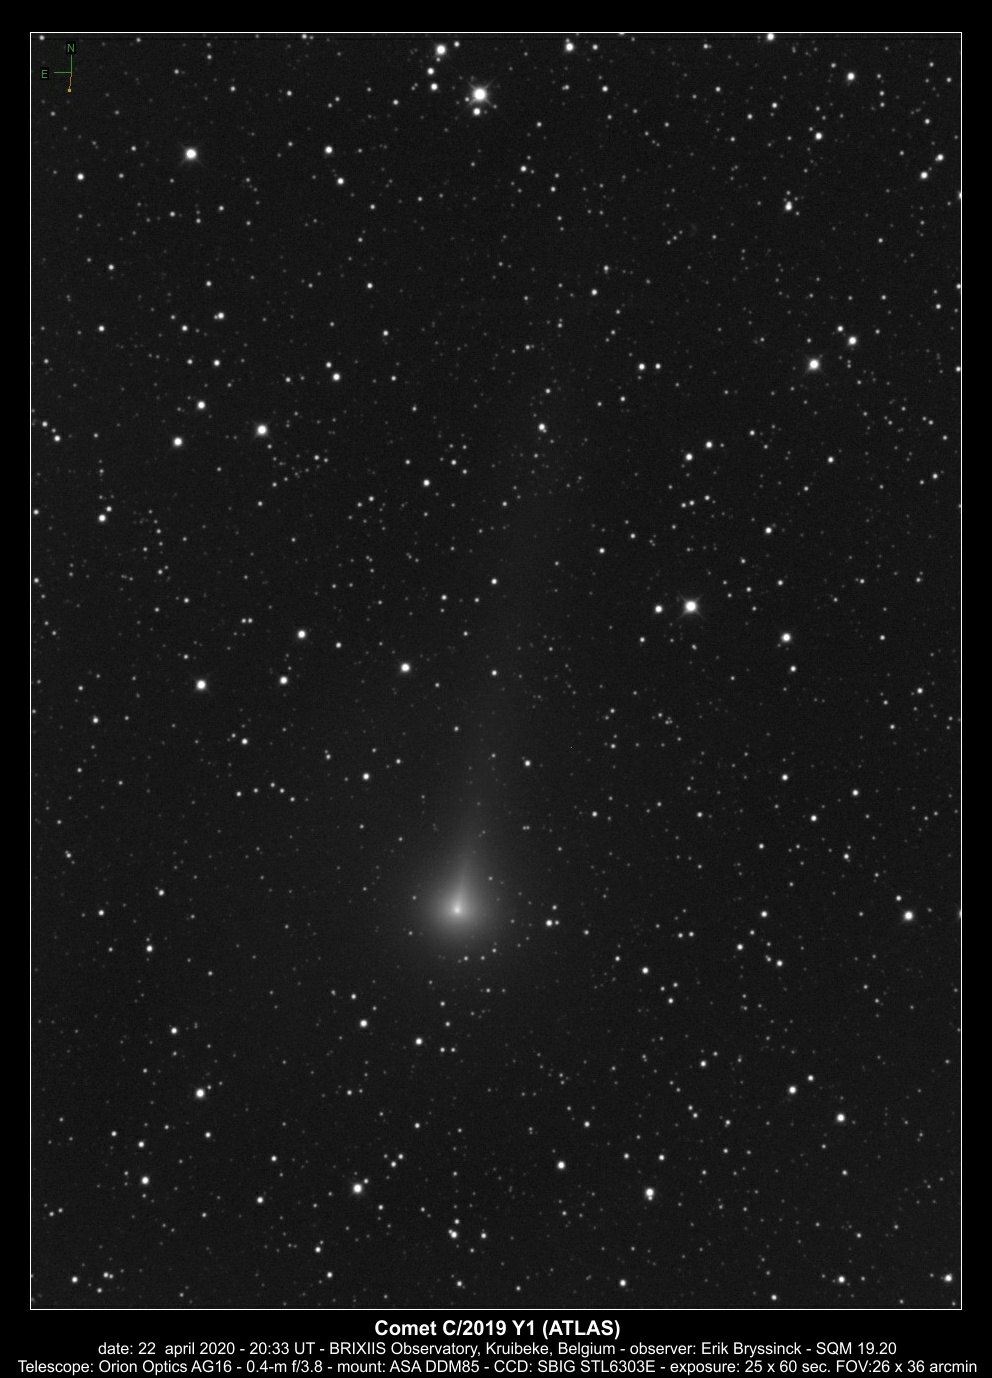 comet C/2019 Y1 (ATLAS) on 22 april, Erik Bryssinck, BRIXIIS Observatory